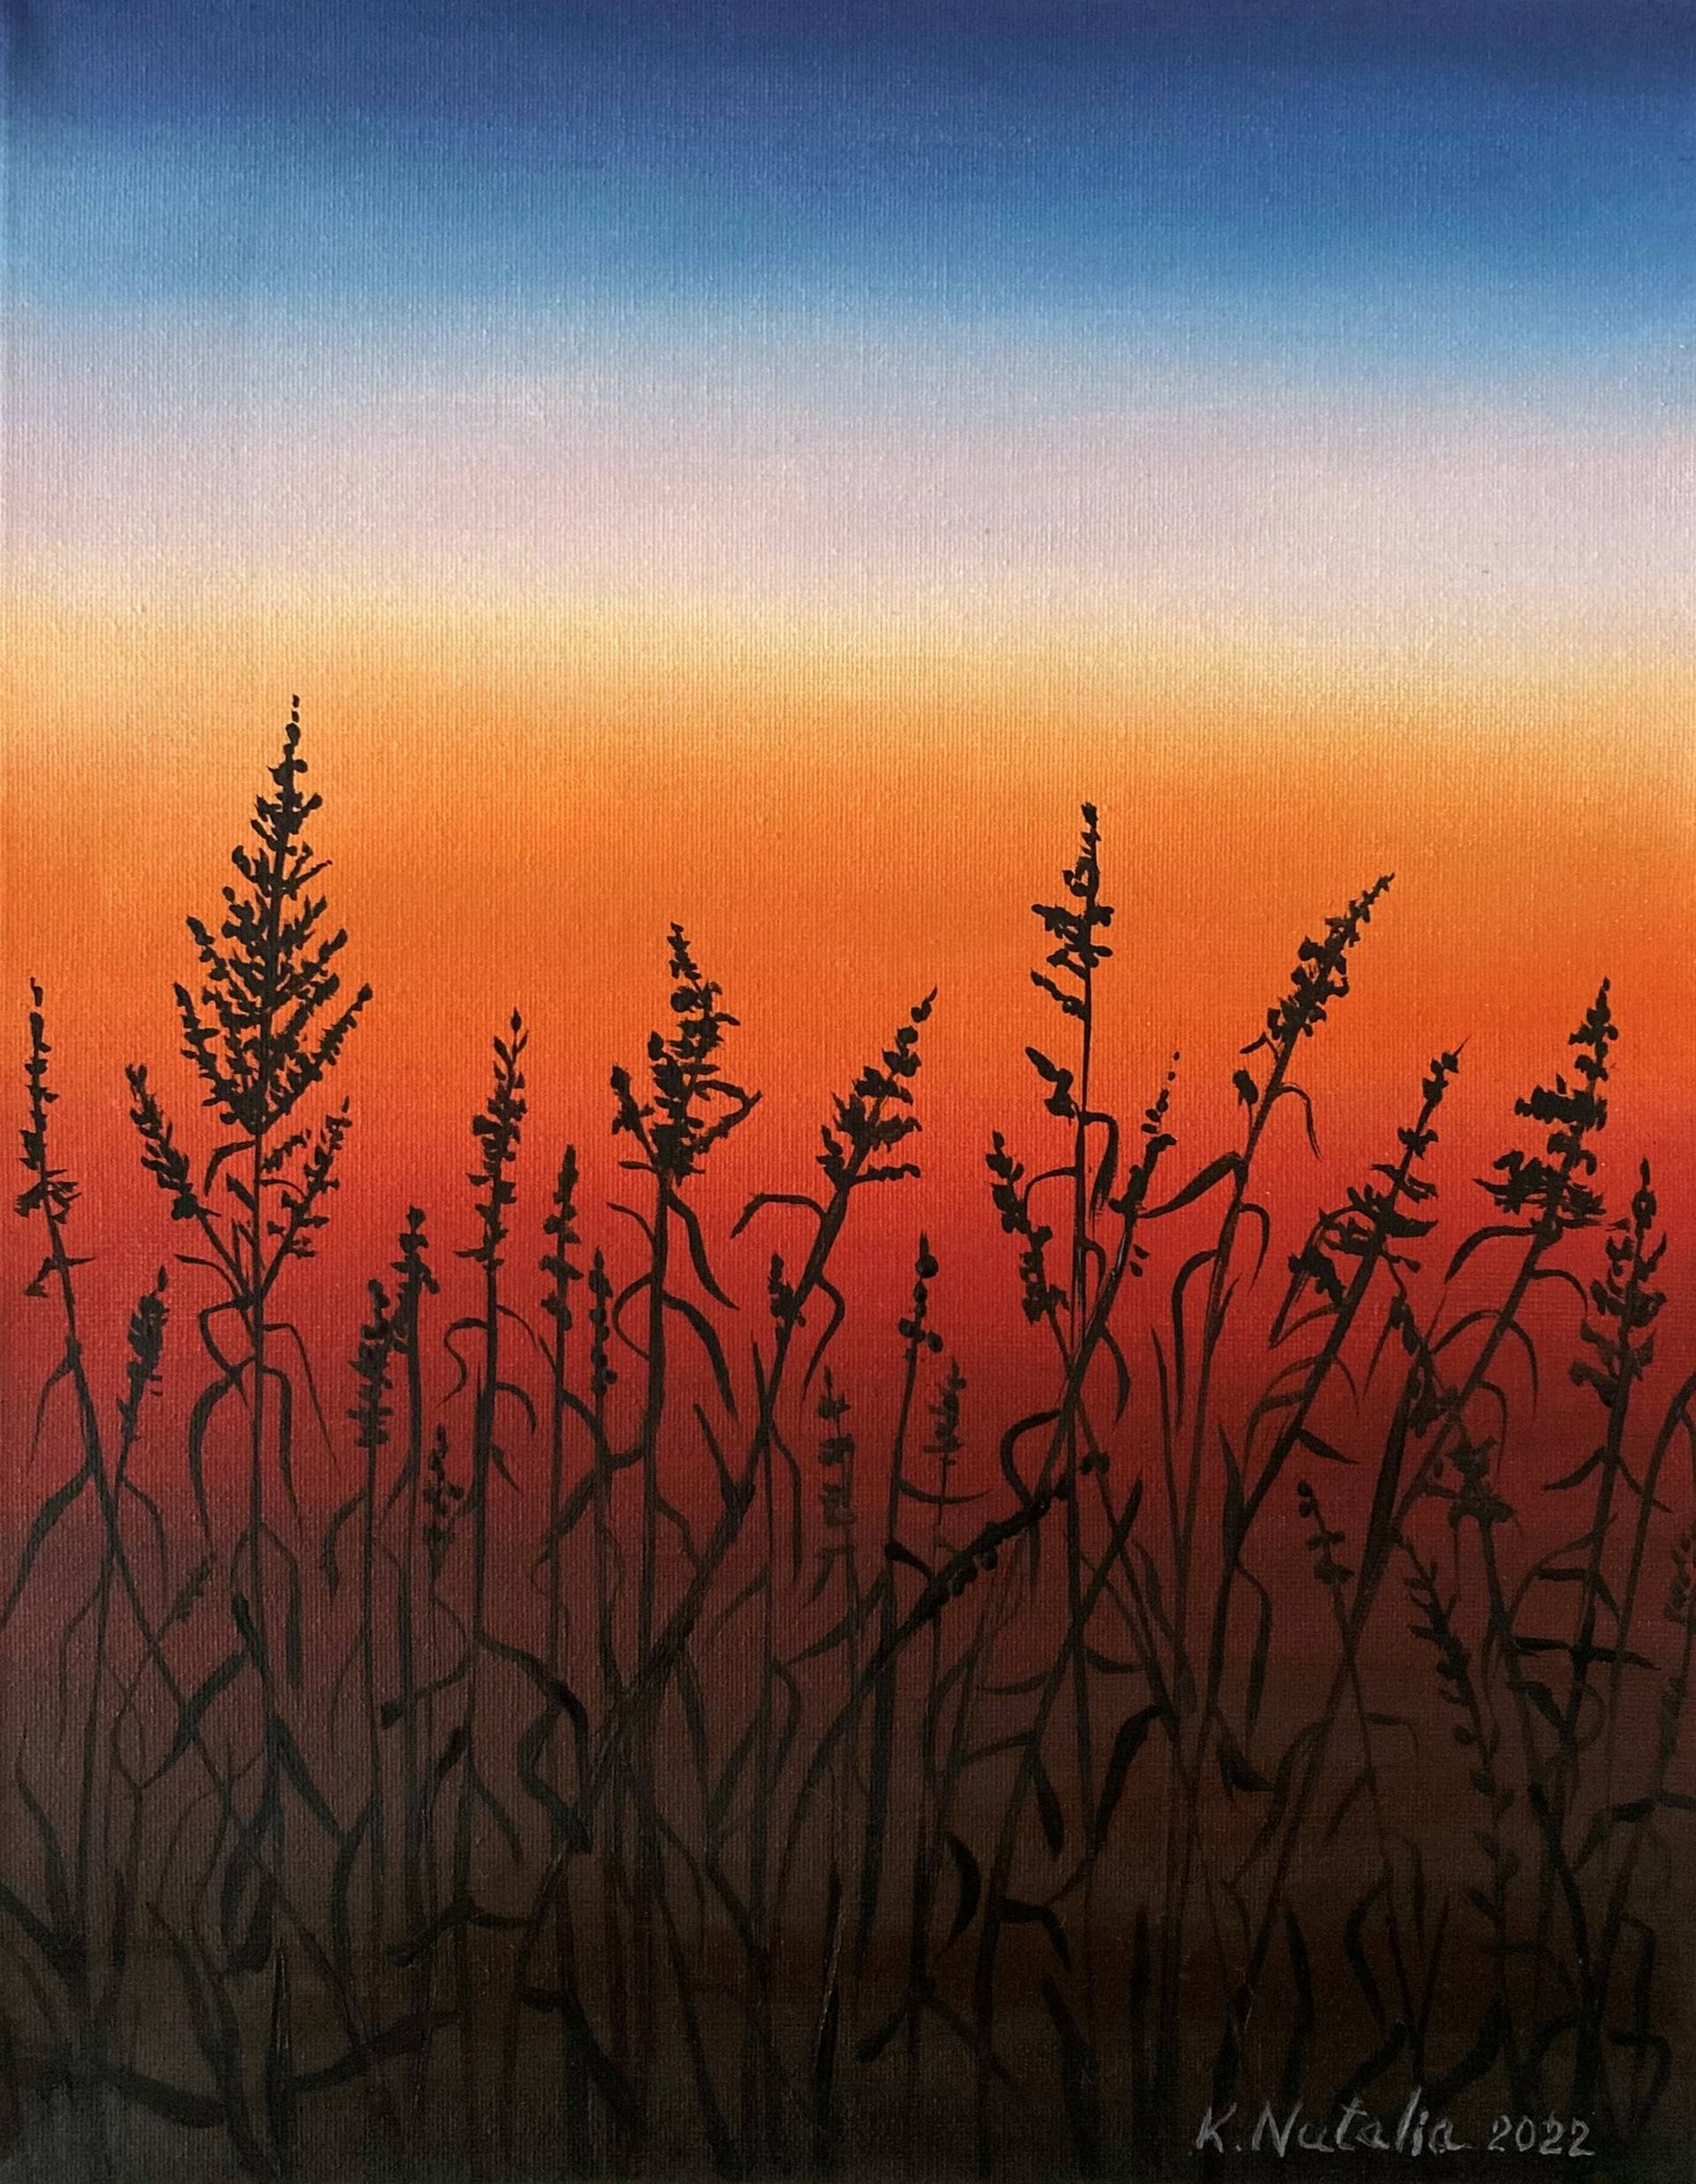 grassland sunset